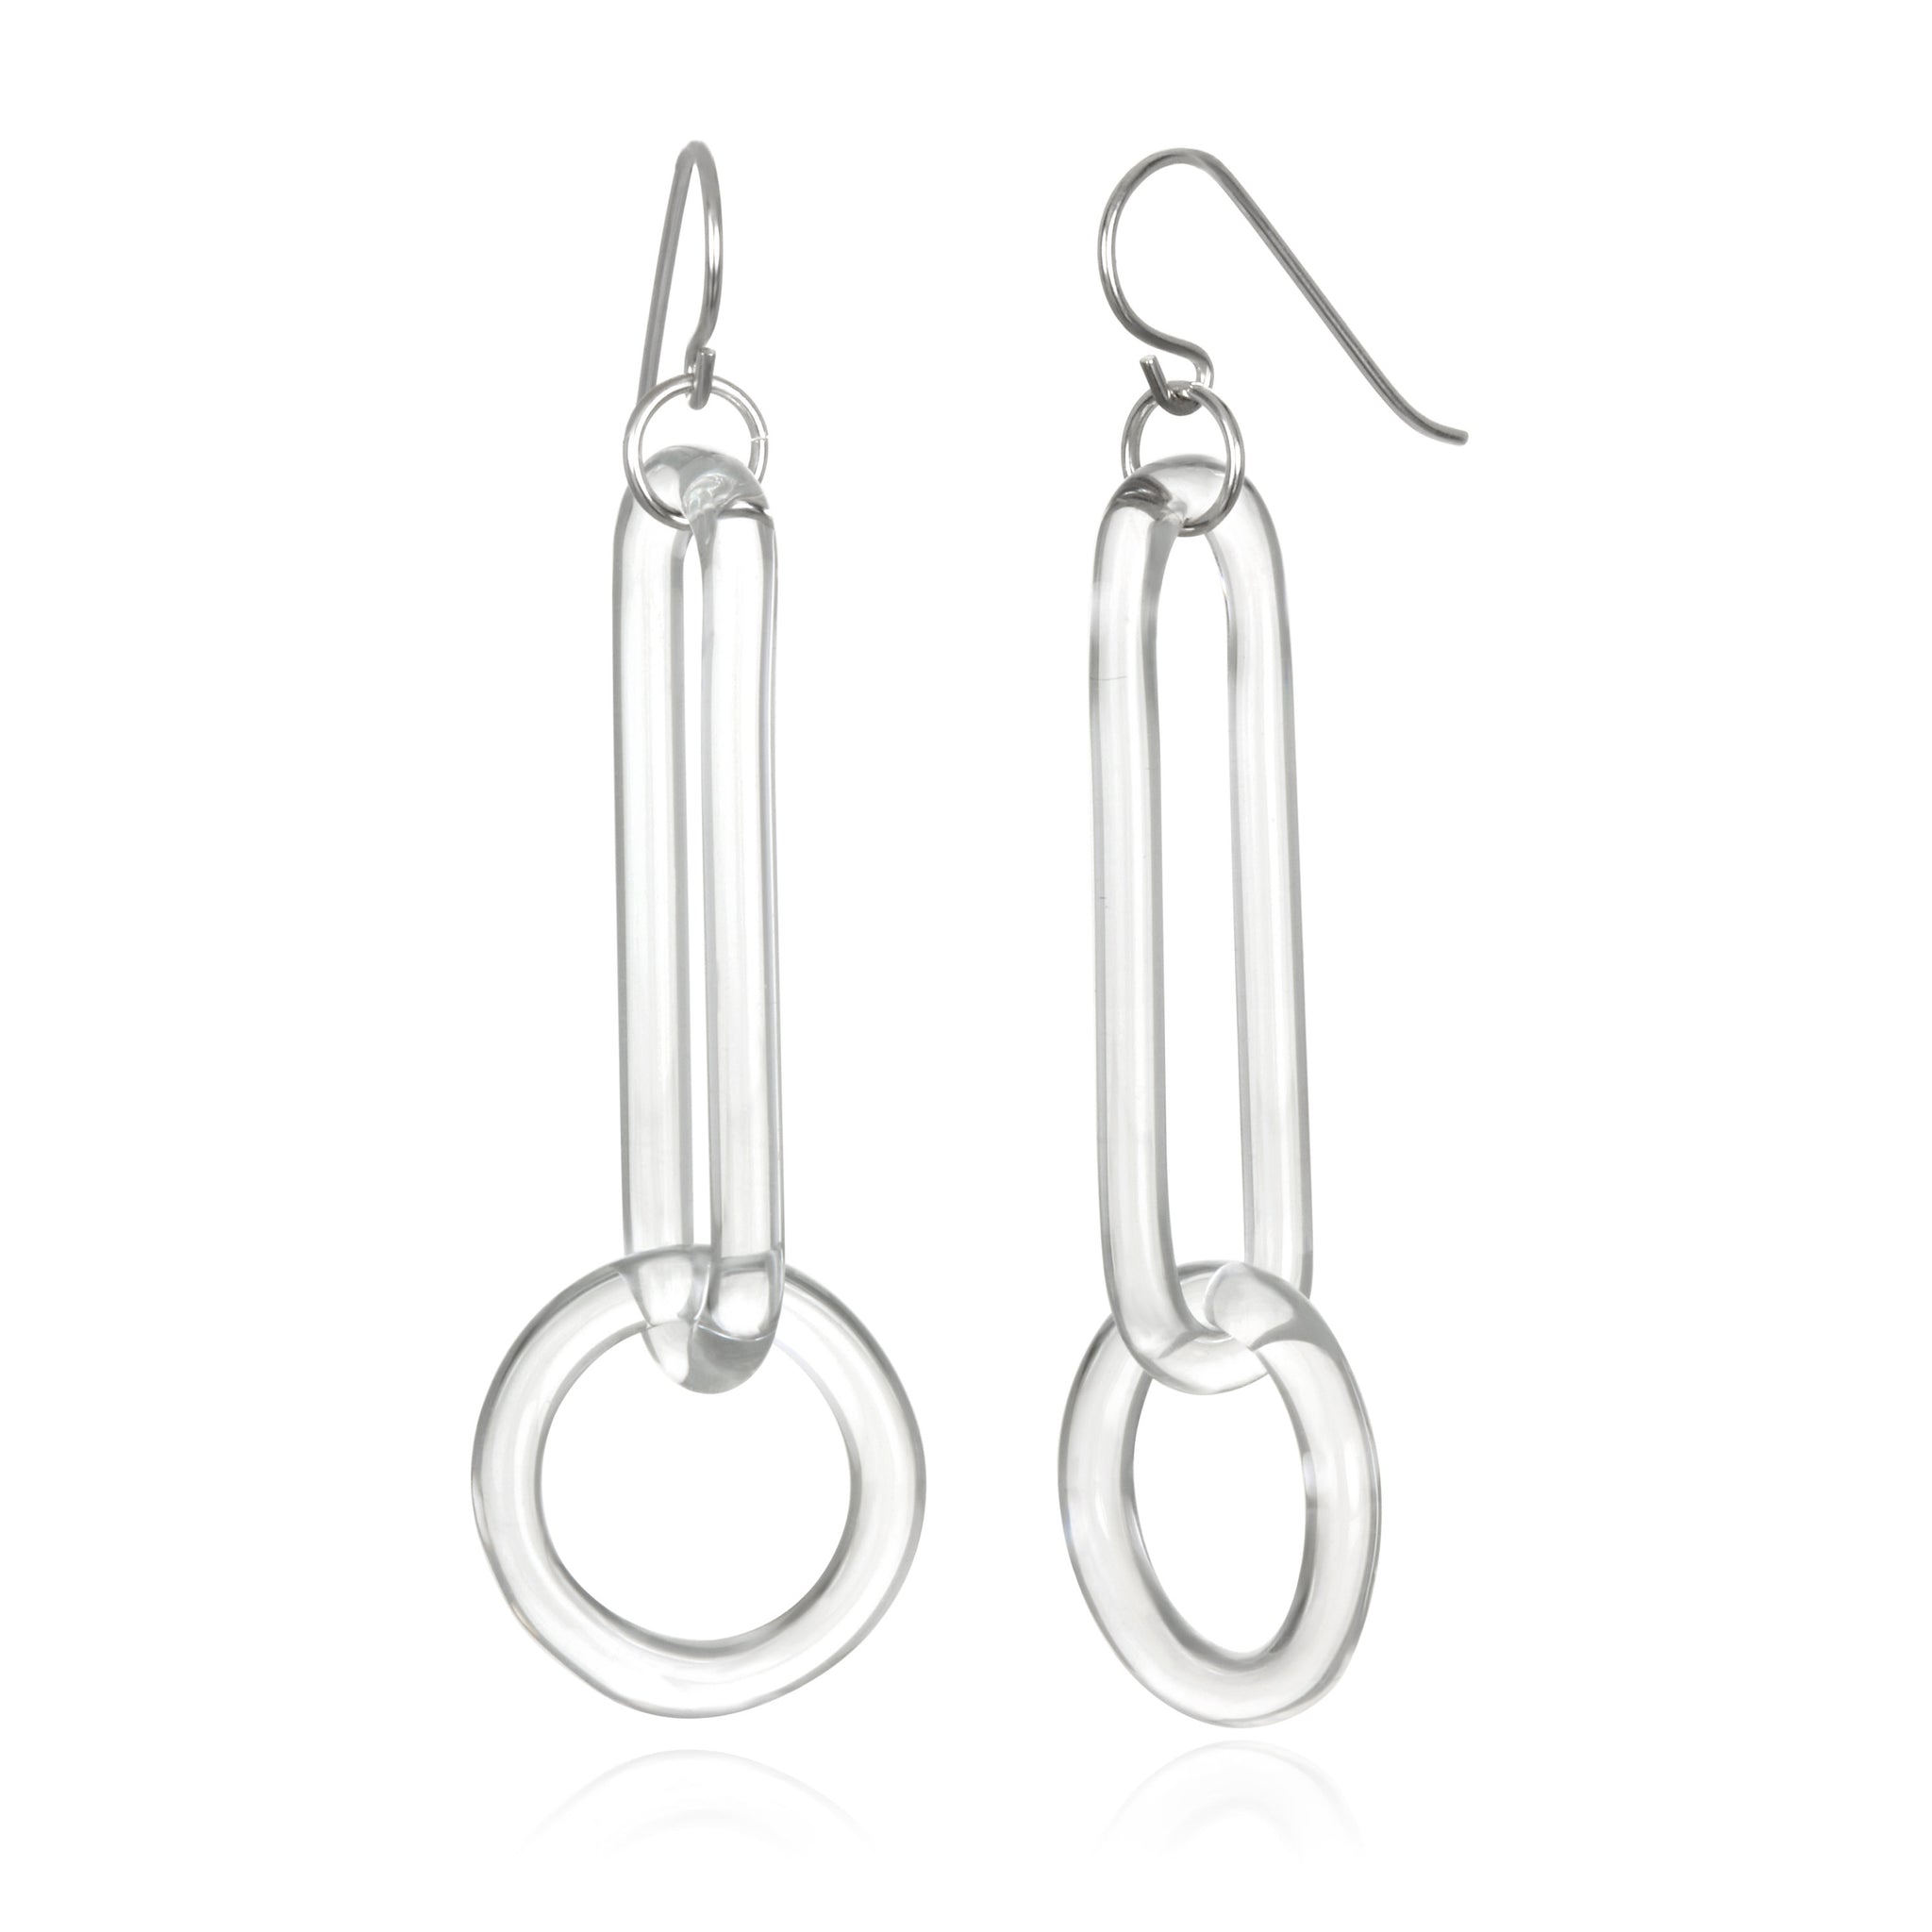 Glass Long Link Chain Earrings - Eclipse Gallery